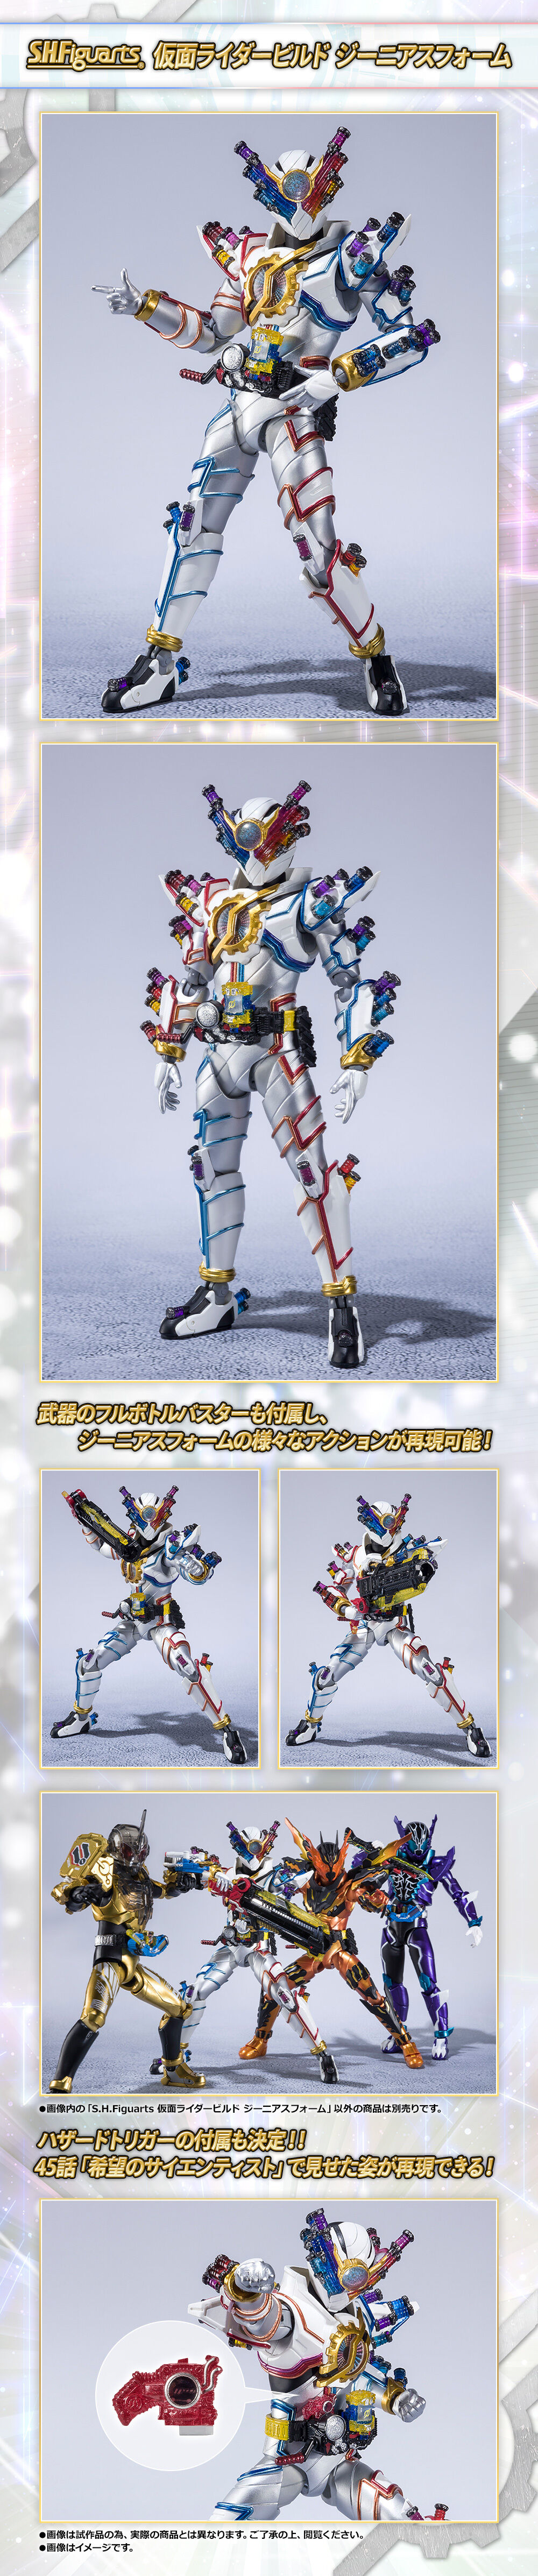 S.H.Figuarts Kamen Rider BUILD GENIUS FORM Action Figure